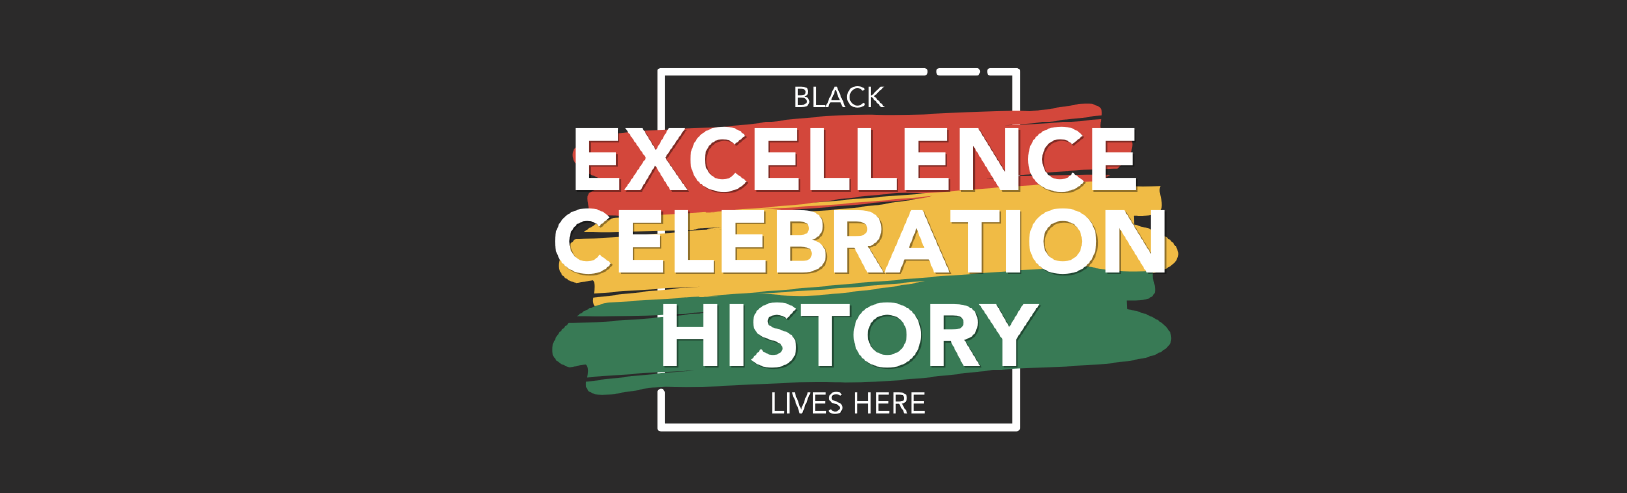 Black Excellence, Celebration, History Lives Here